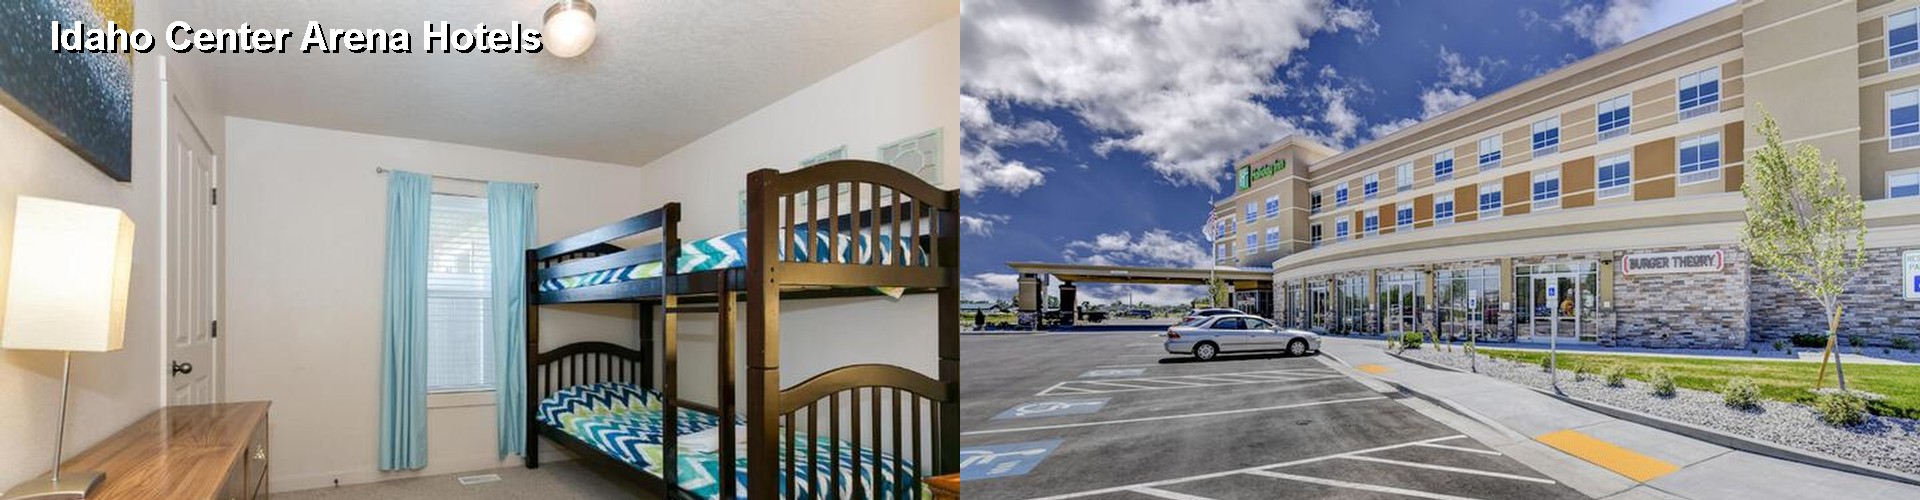 5 Best Hotels near Idaho Center Arena